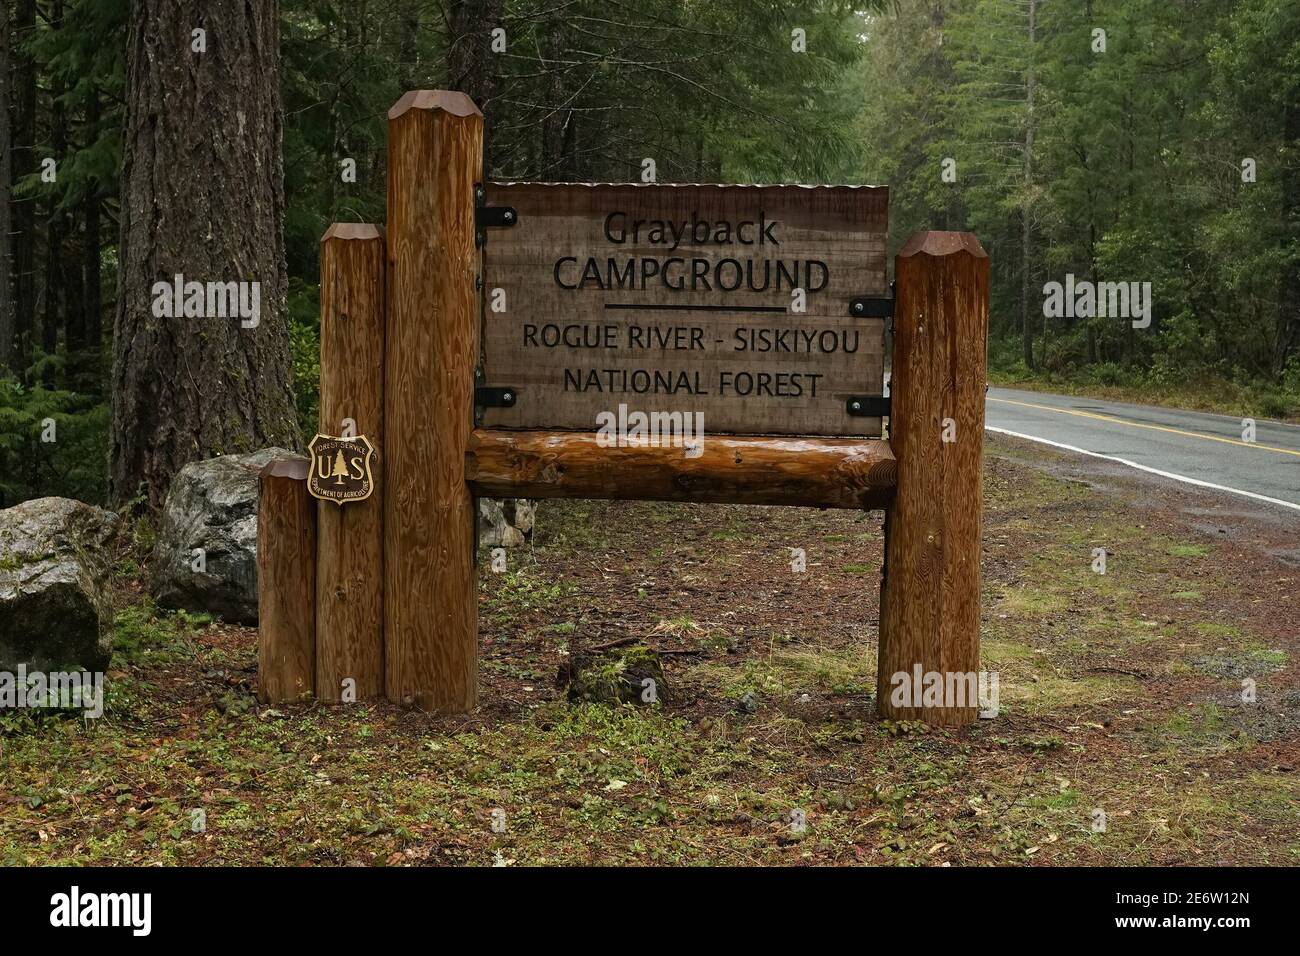 Rogue River, Siskiyou National Forest, Grayback Campground Zeichen Stockfoto